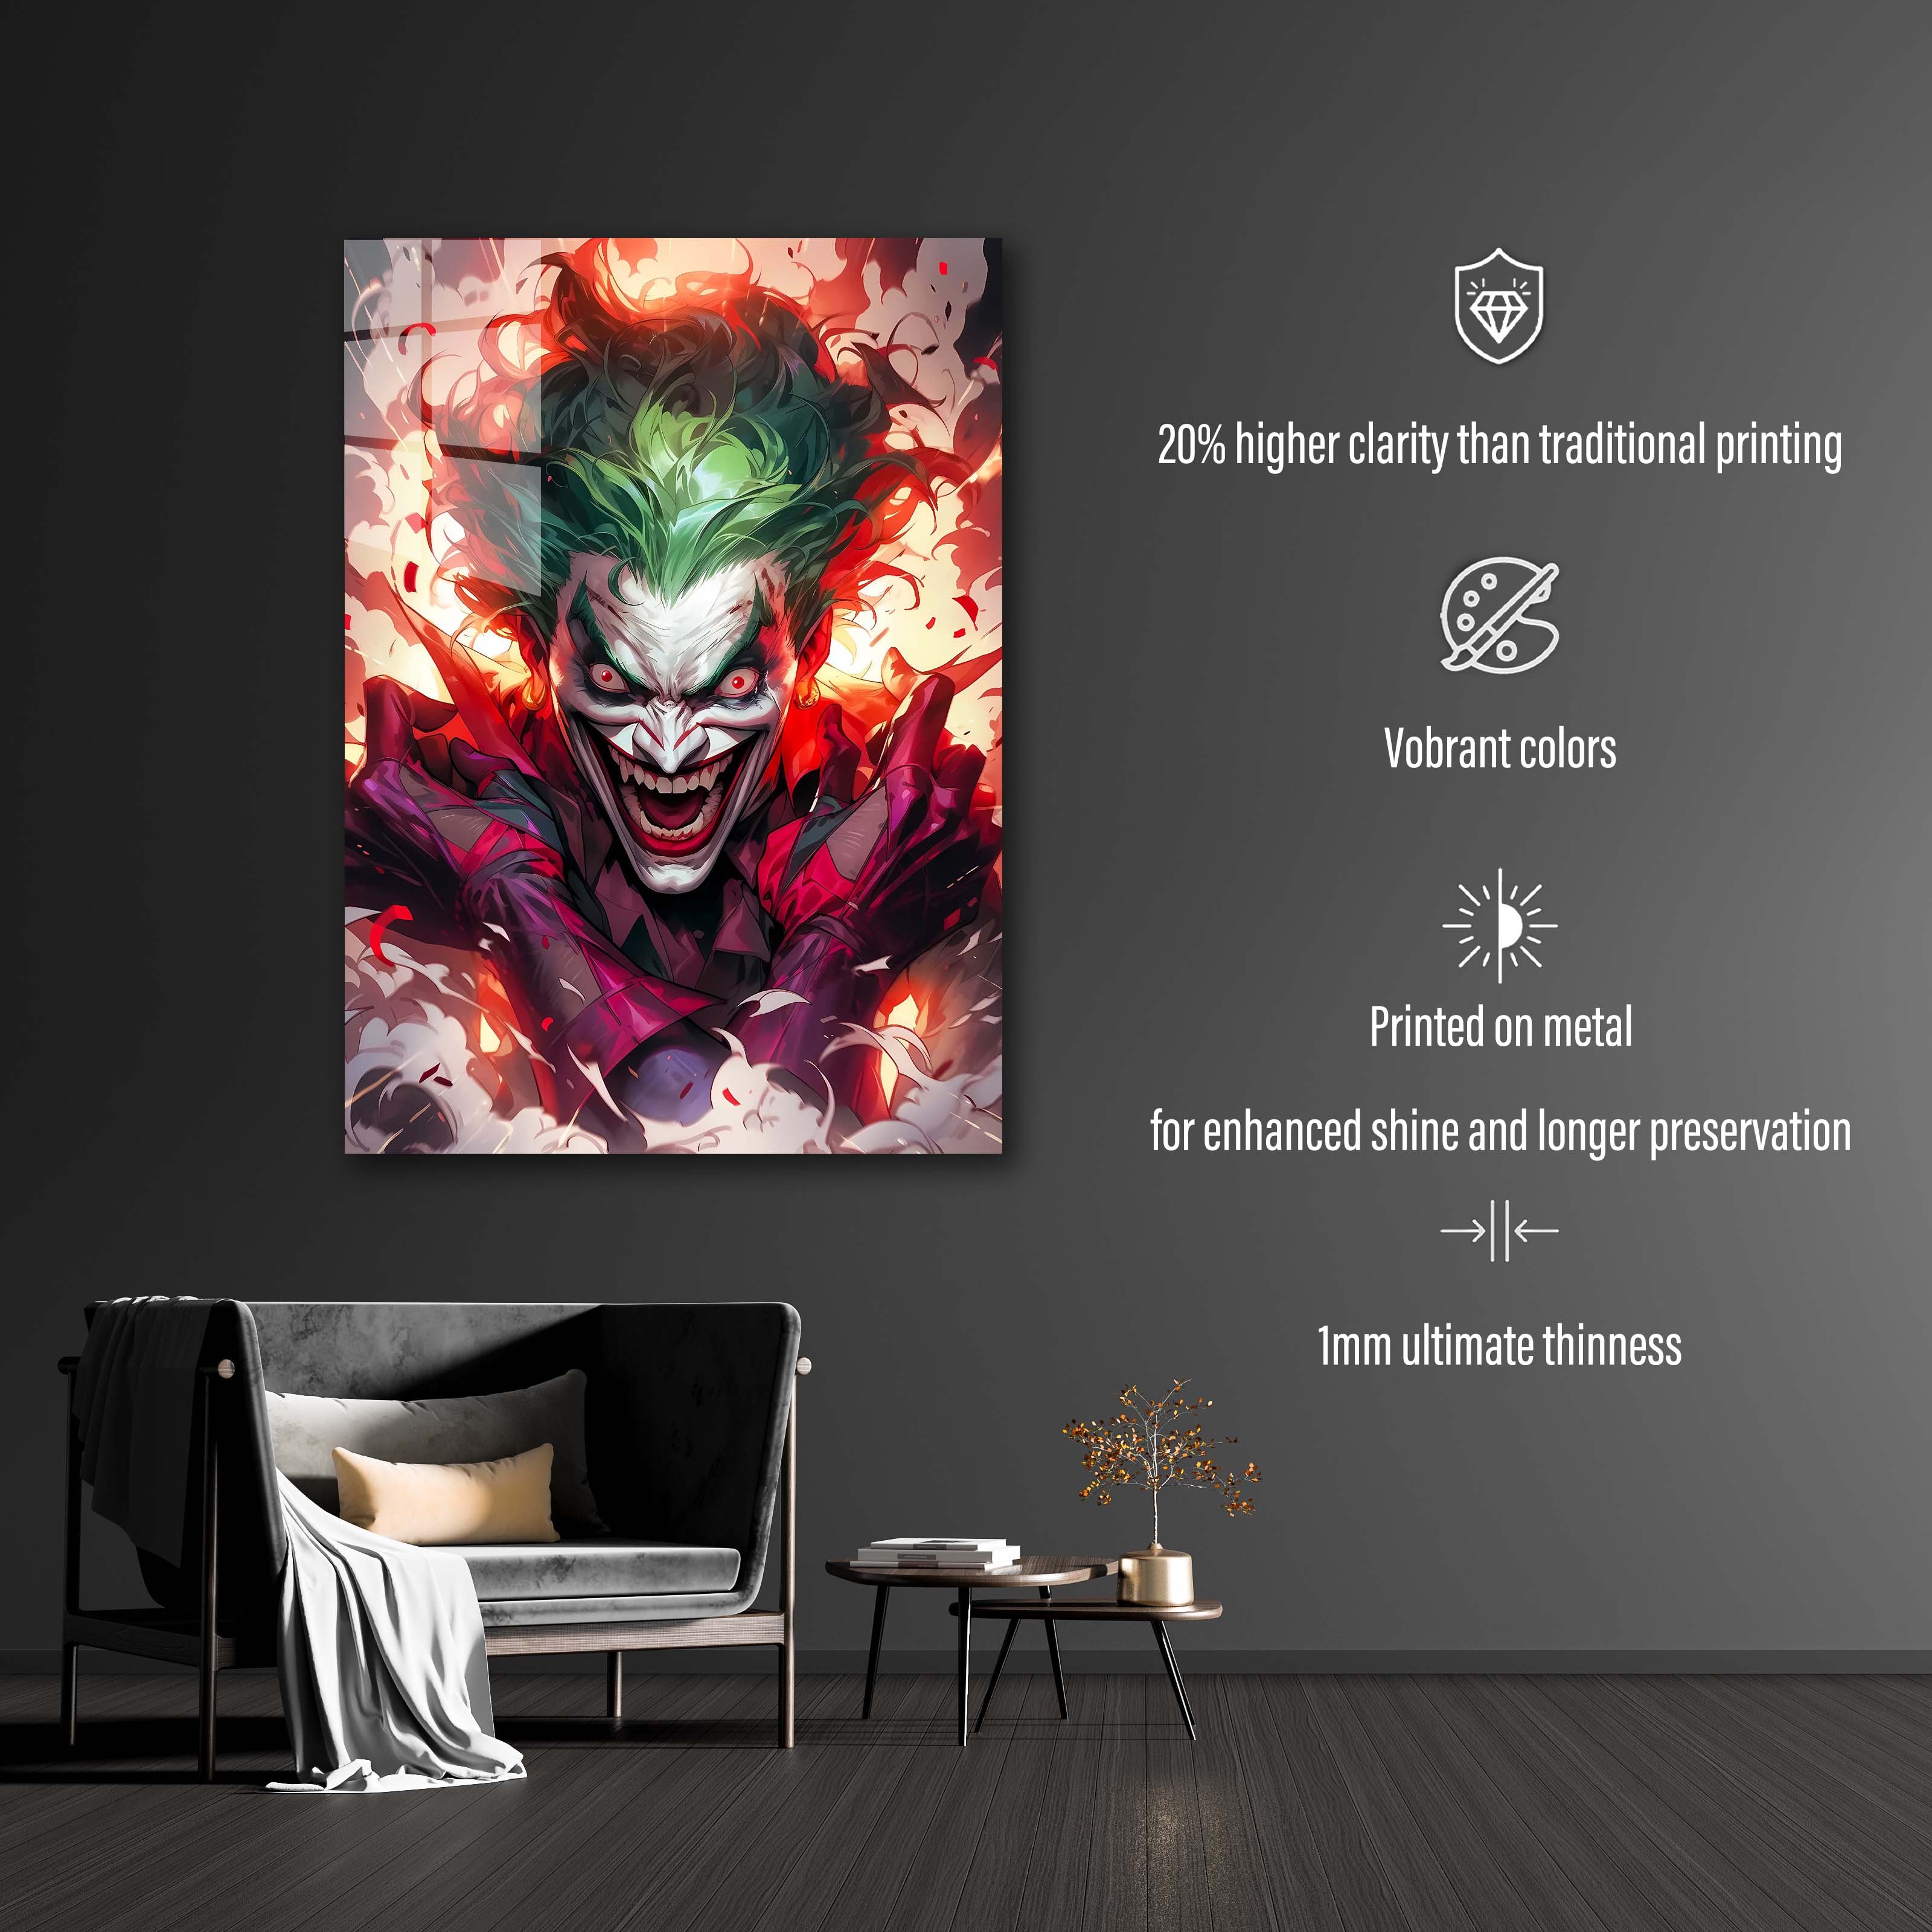 Joker01-designed by @MarianaMA